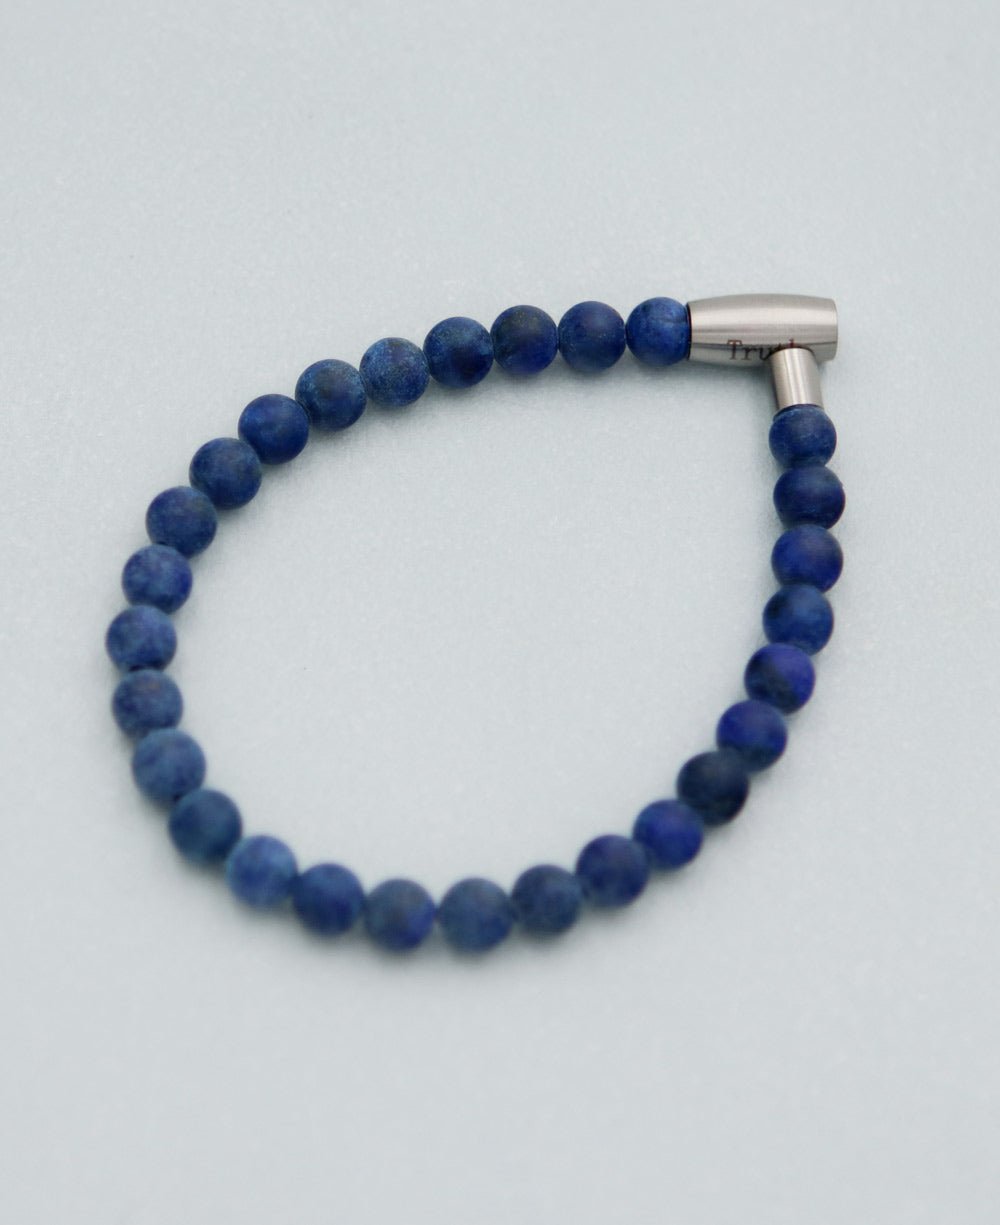 Inspirational Gemstone Bracelets for Men - Lapis Lazuli